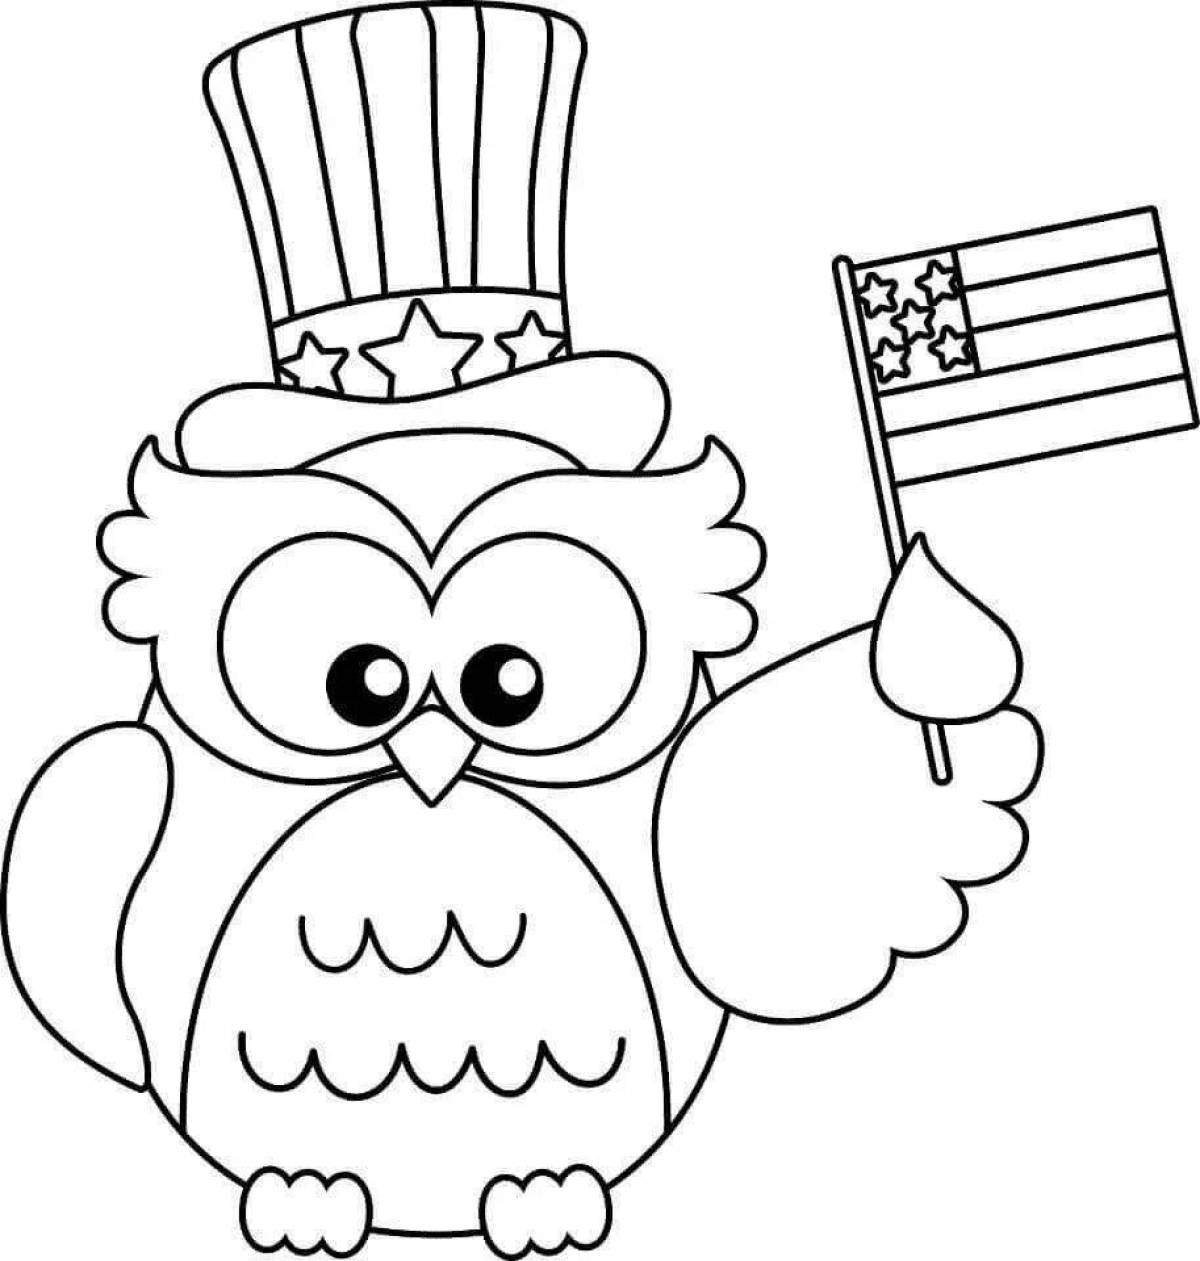 Christmas owl coloring page